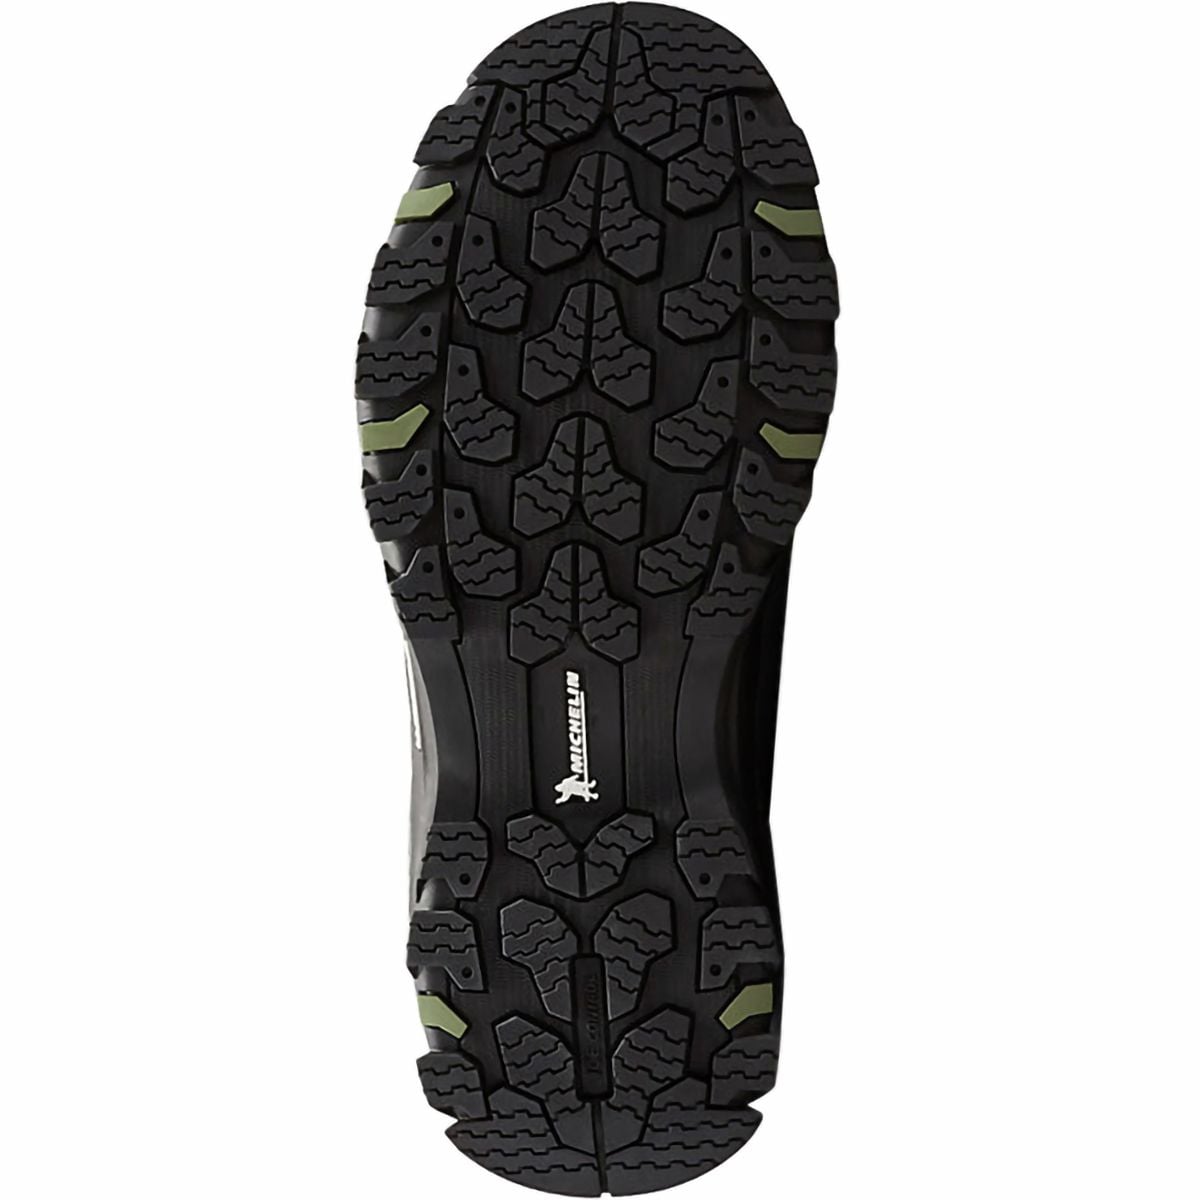 Responder James Dyson Tantos Columbia Powderhouse Titanium Omni-Heat 3D Outdry Winter Boot - Men's -  Footwear